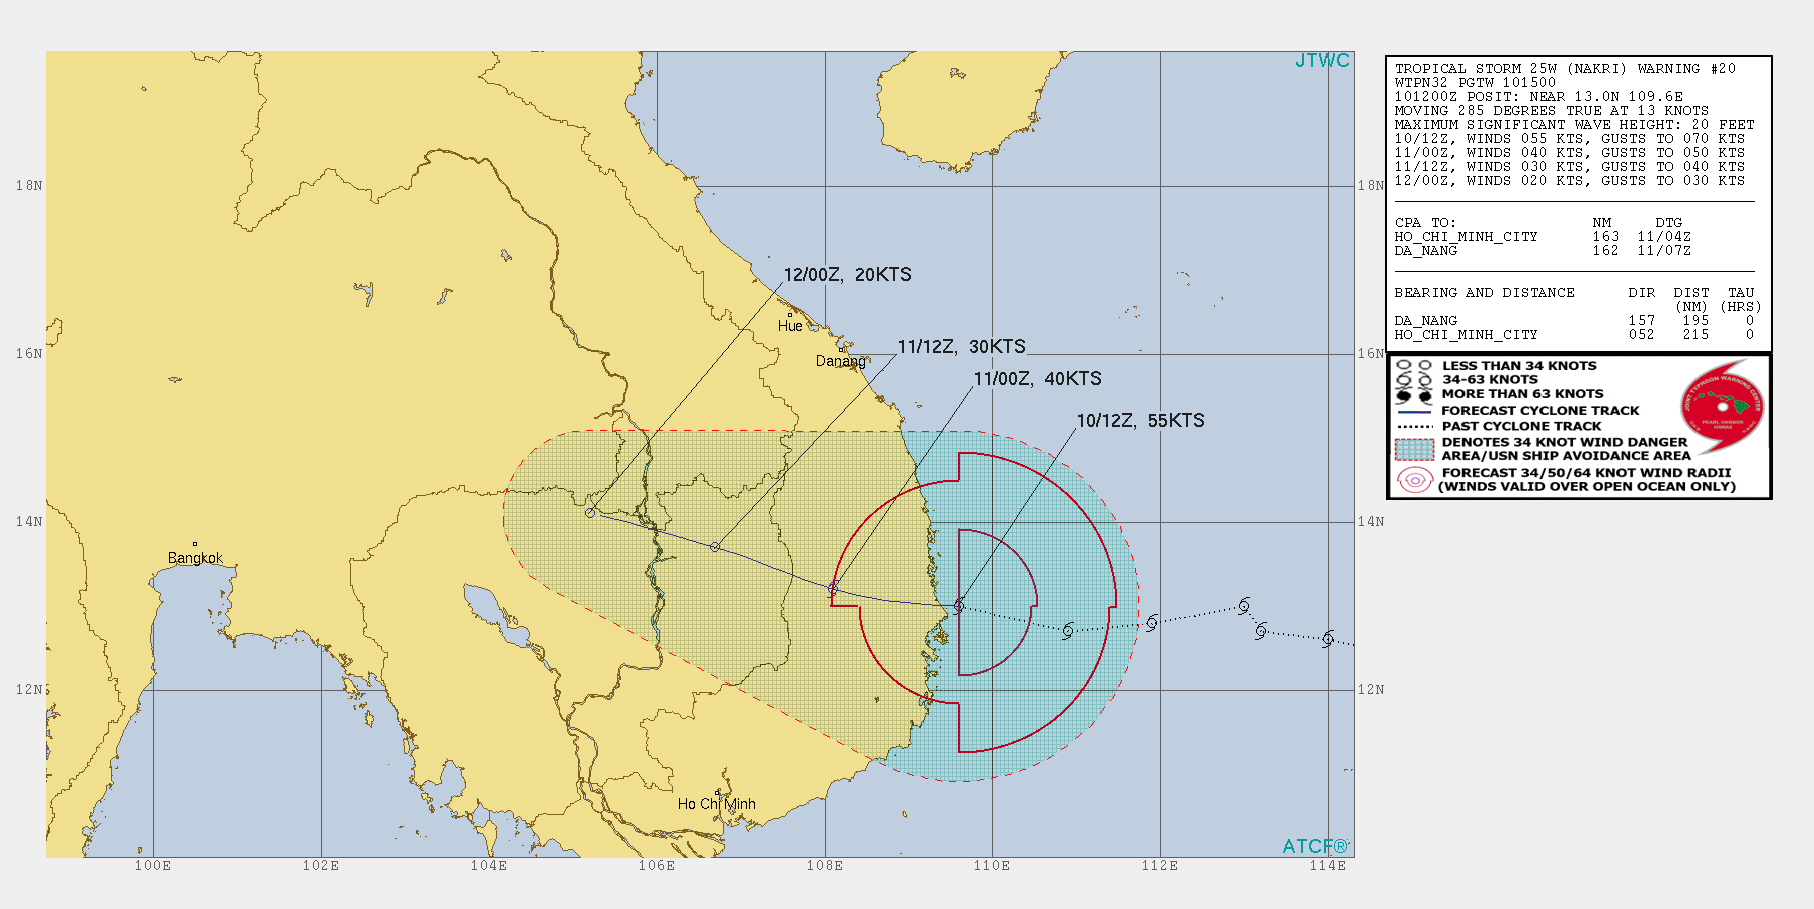 Tropical Storm Nakri(25W) making landfall as a 55knots cyclone